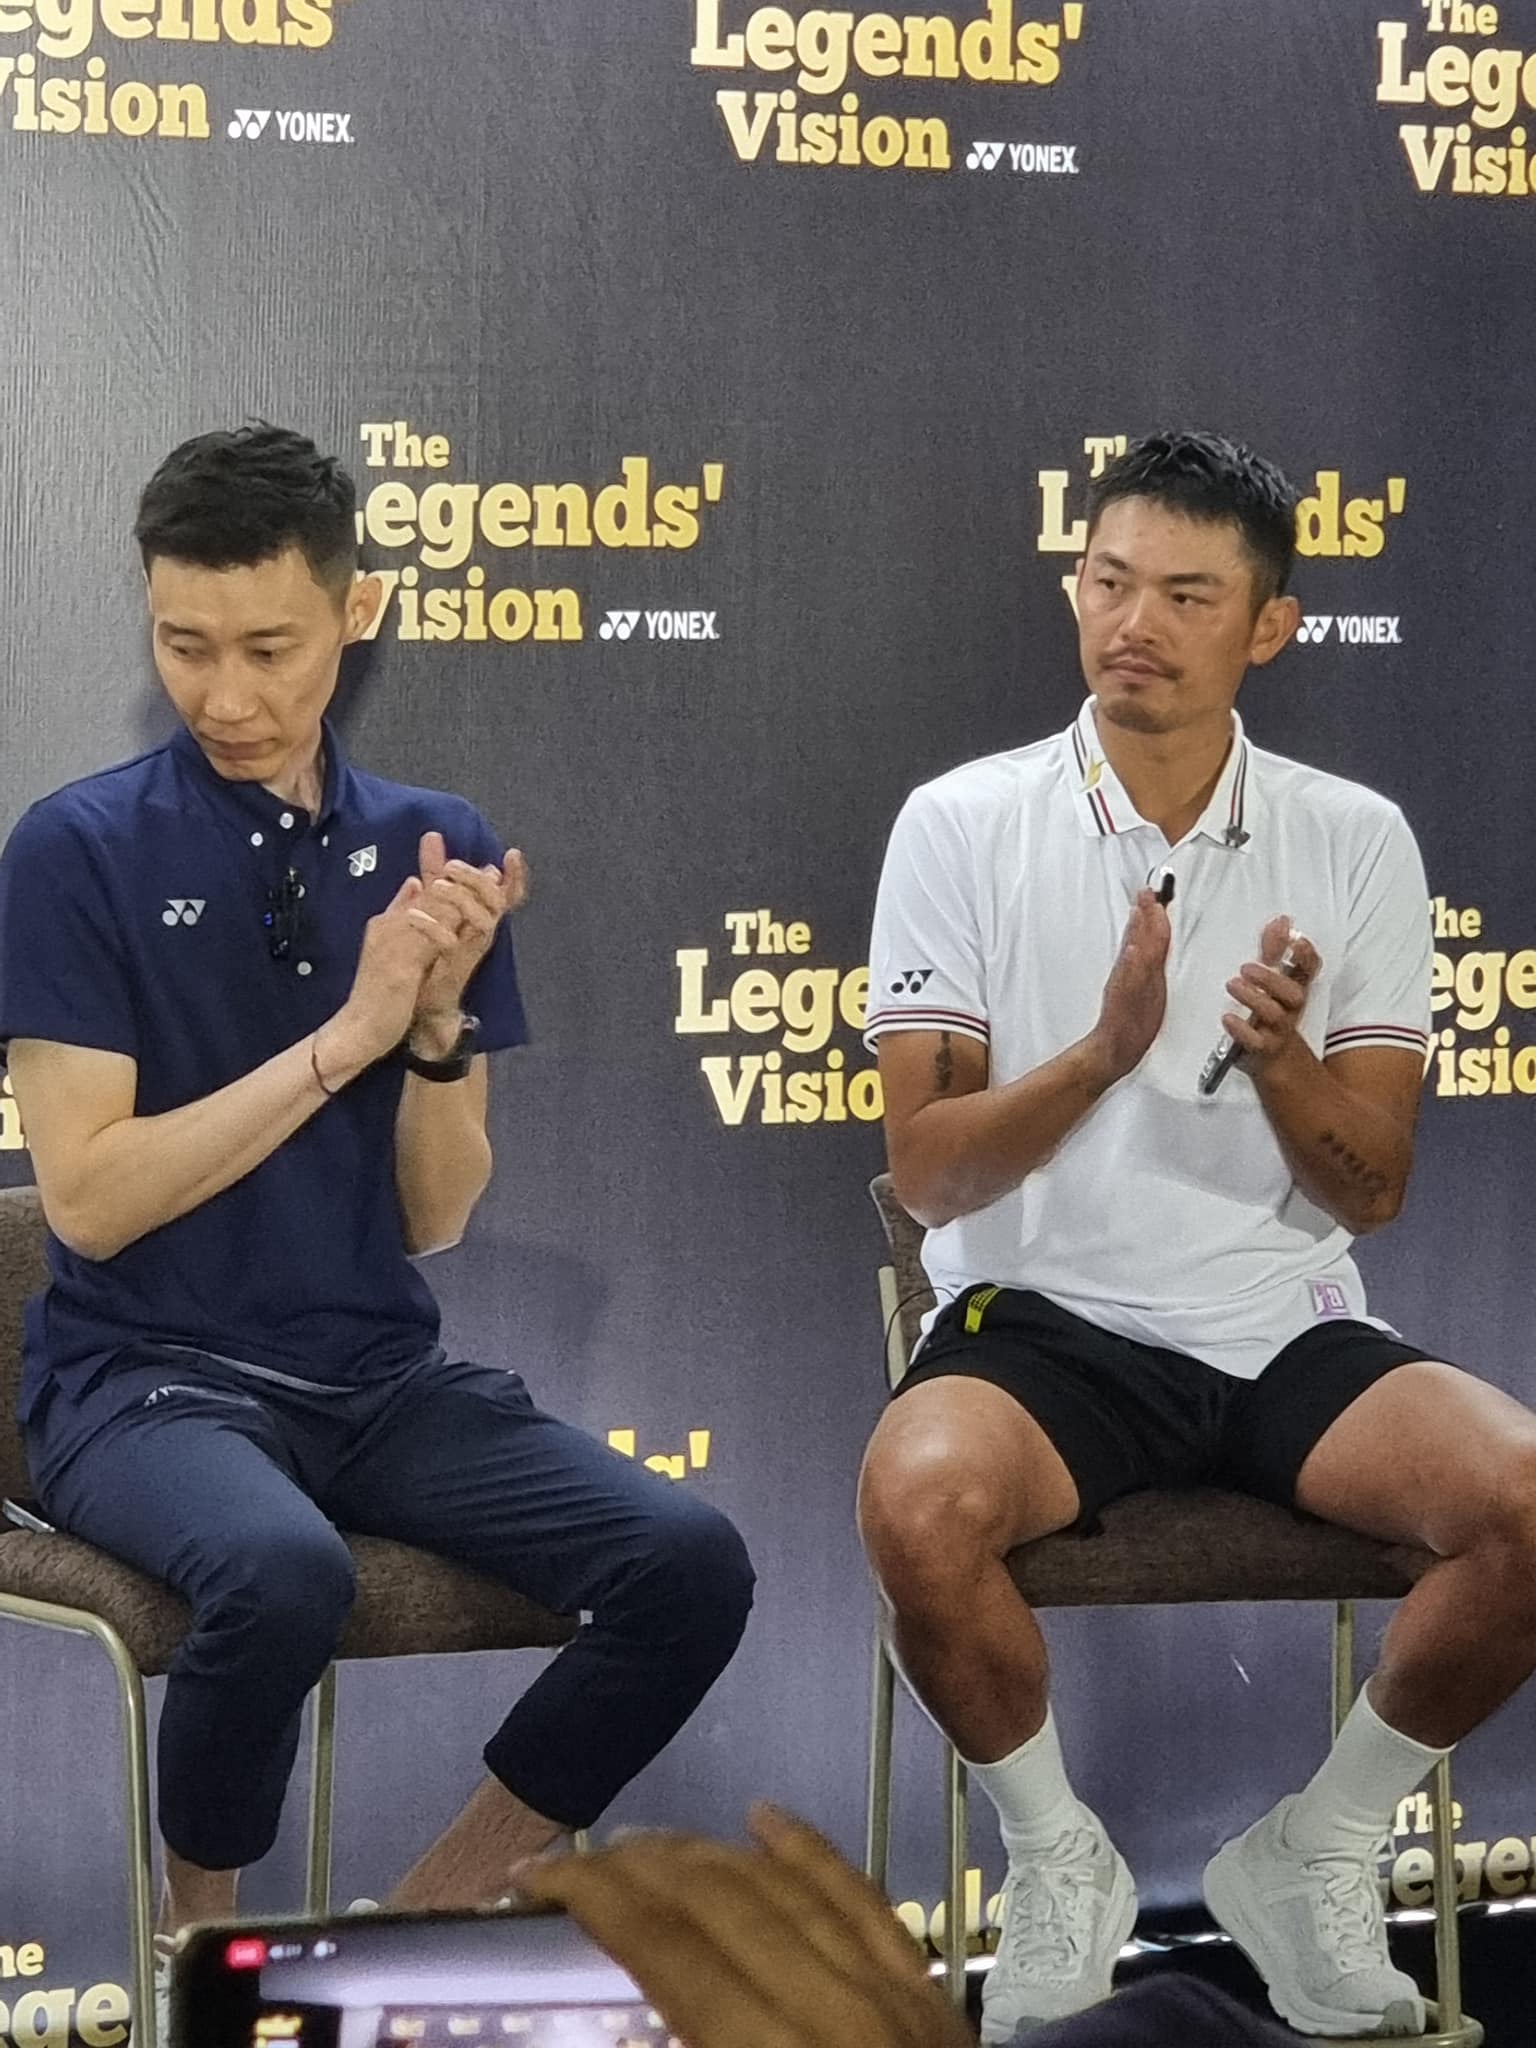 Lee chong wei & lin dan at the legends' vision